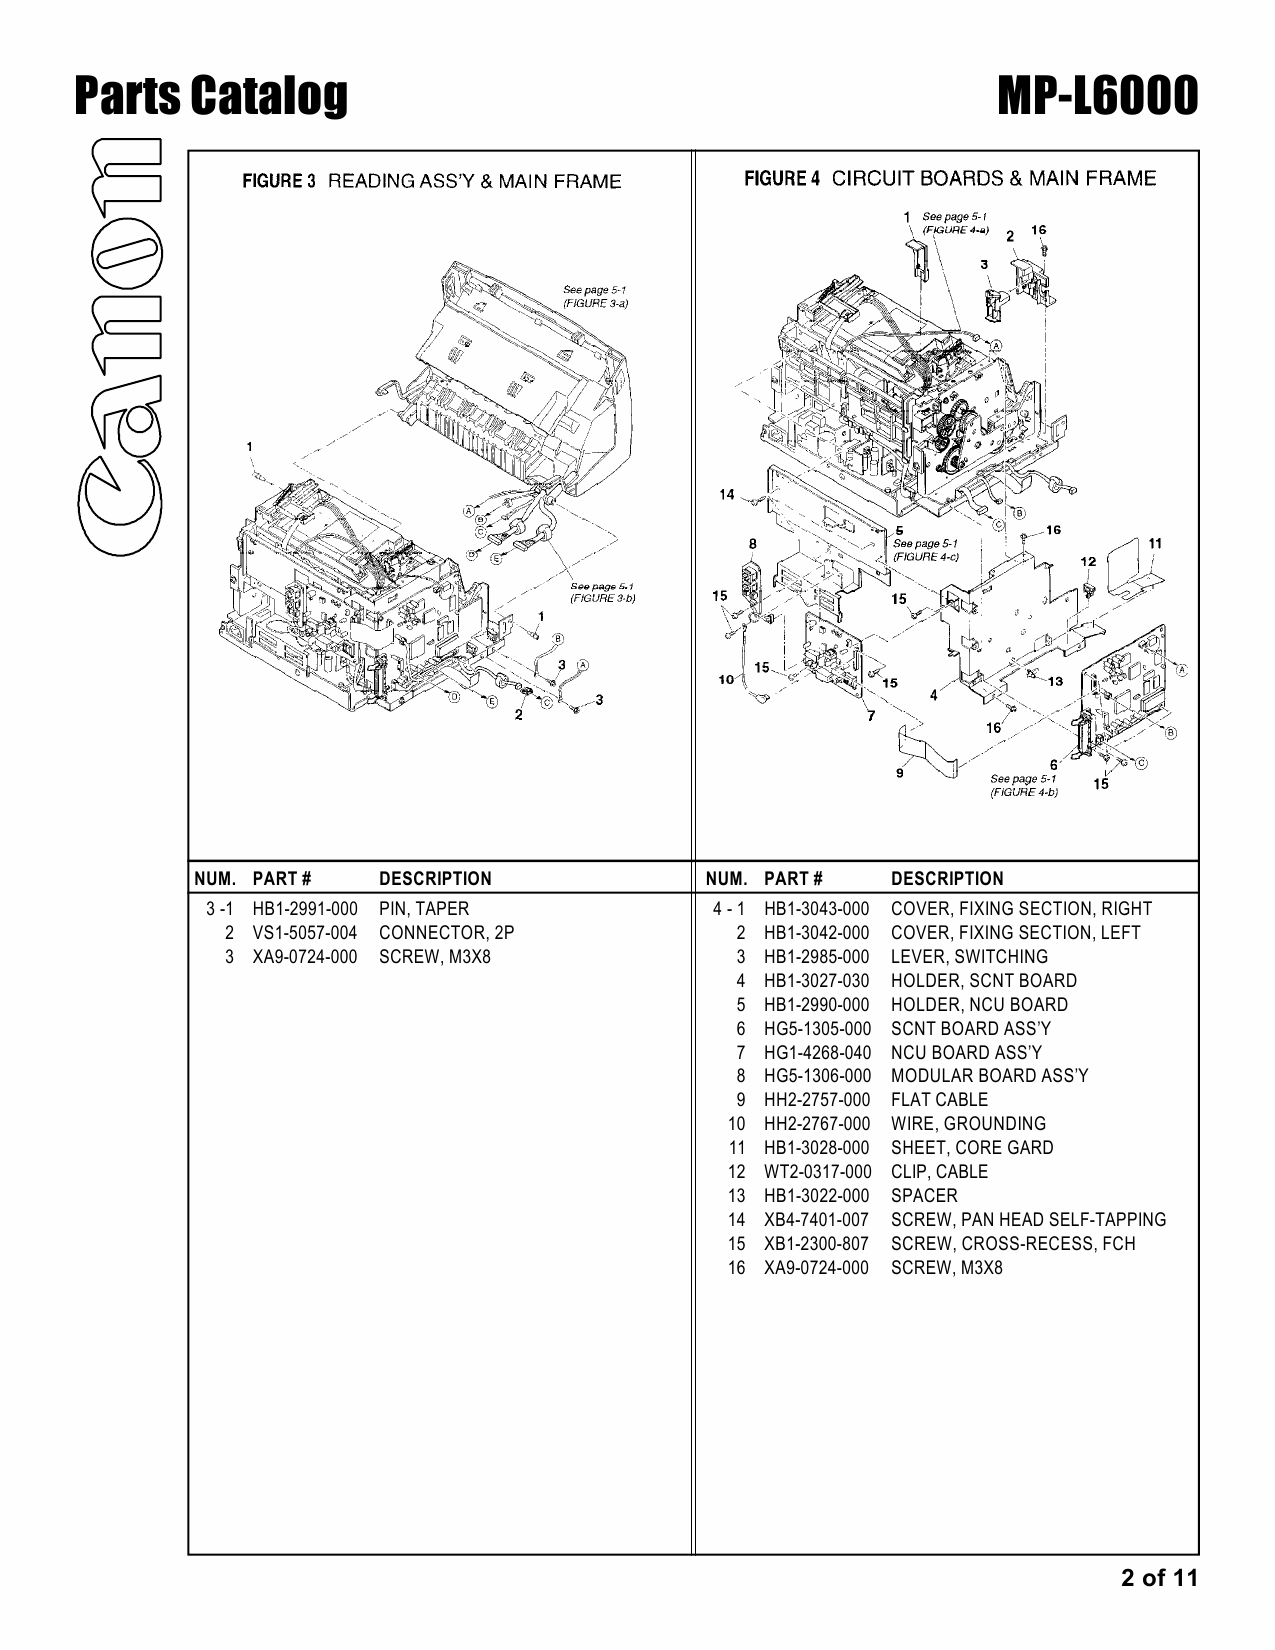 Canon MultiPASS MP-L6000 Parts Catalog Manual-2